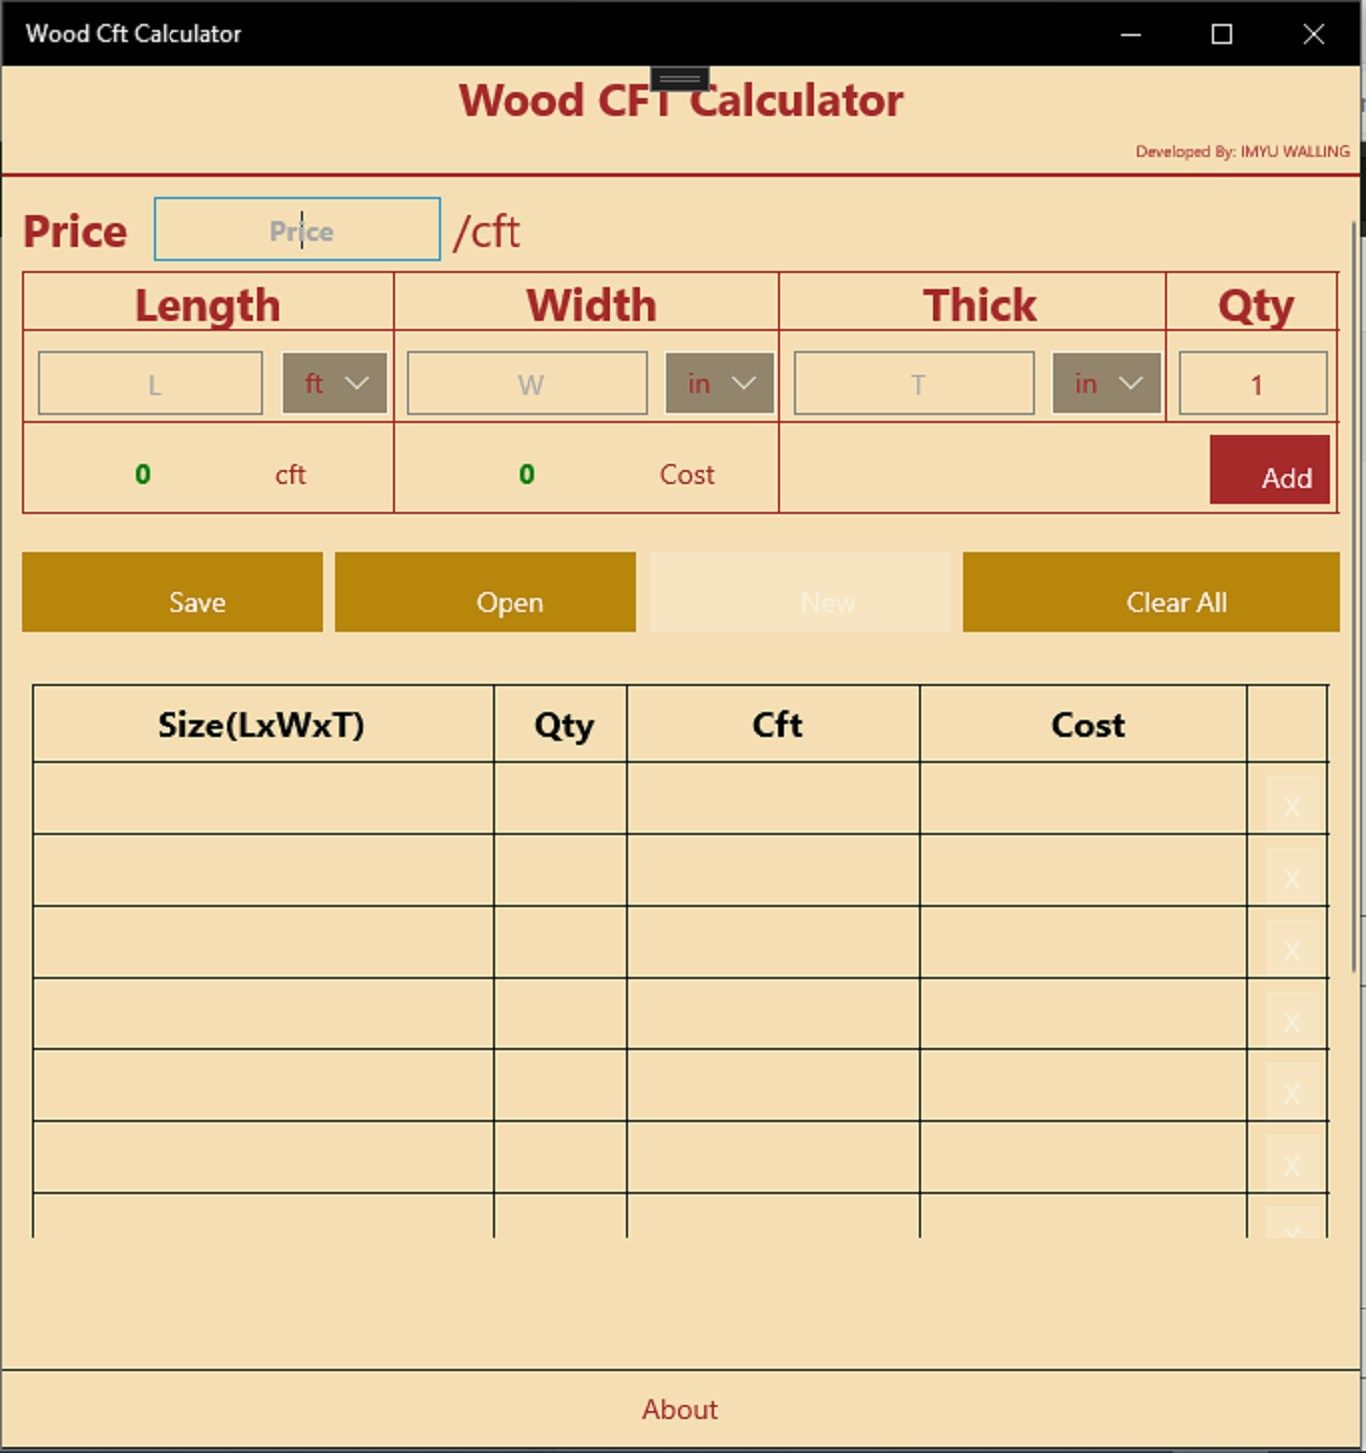 Wood Cft Calculator